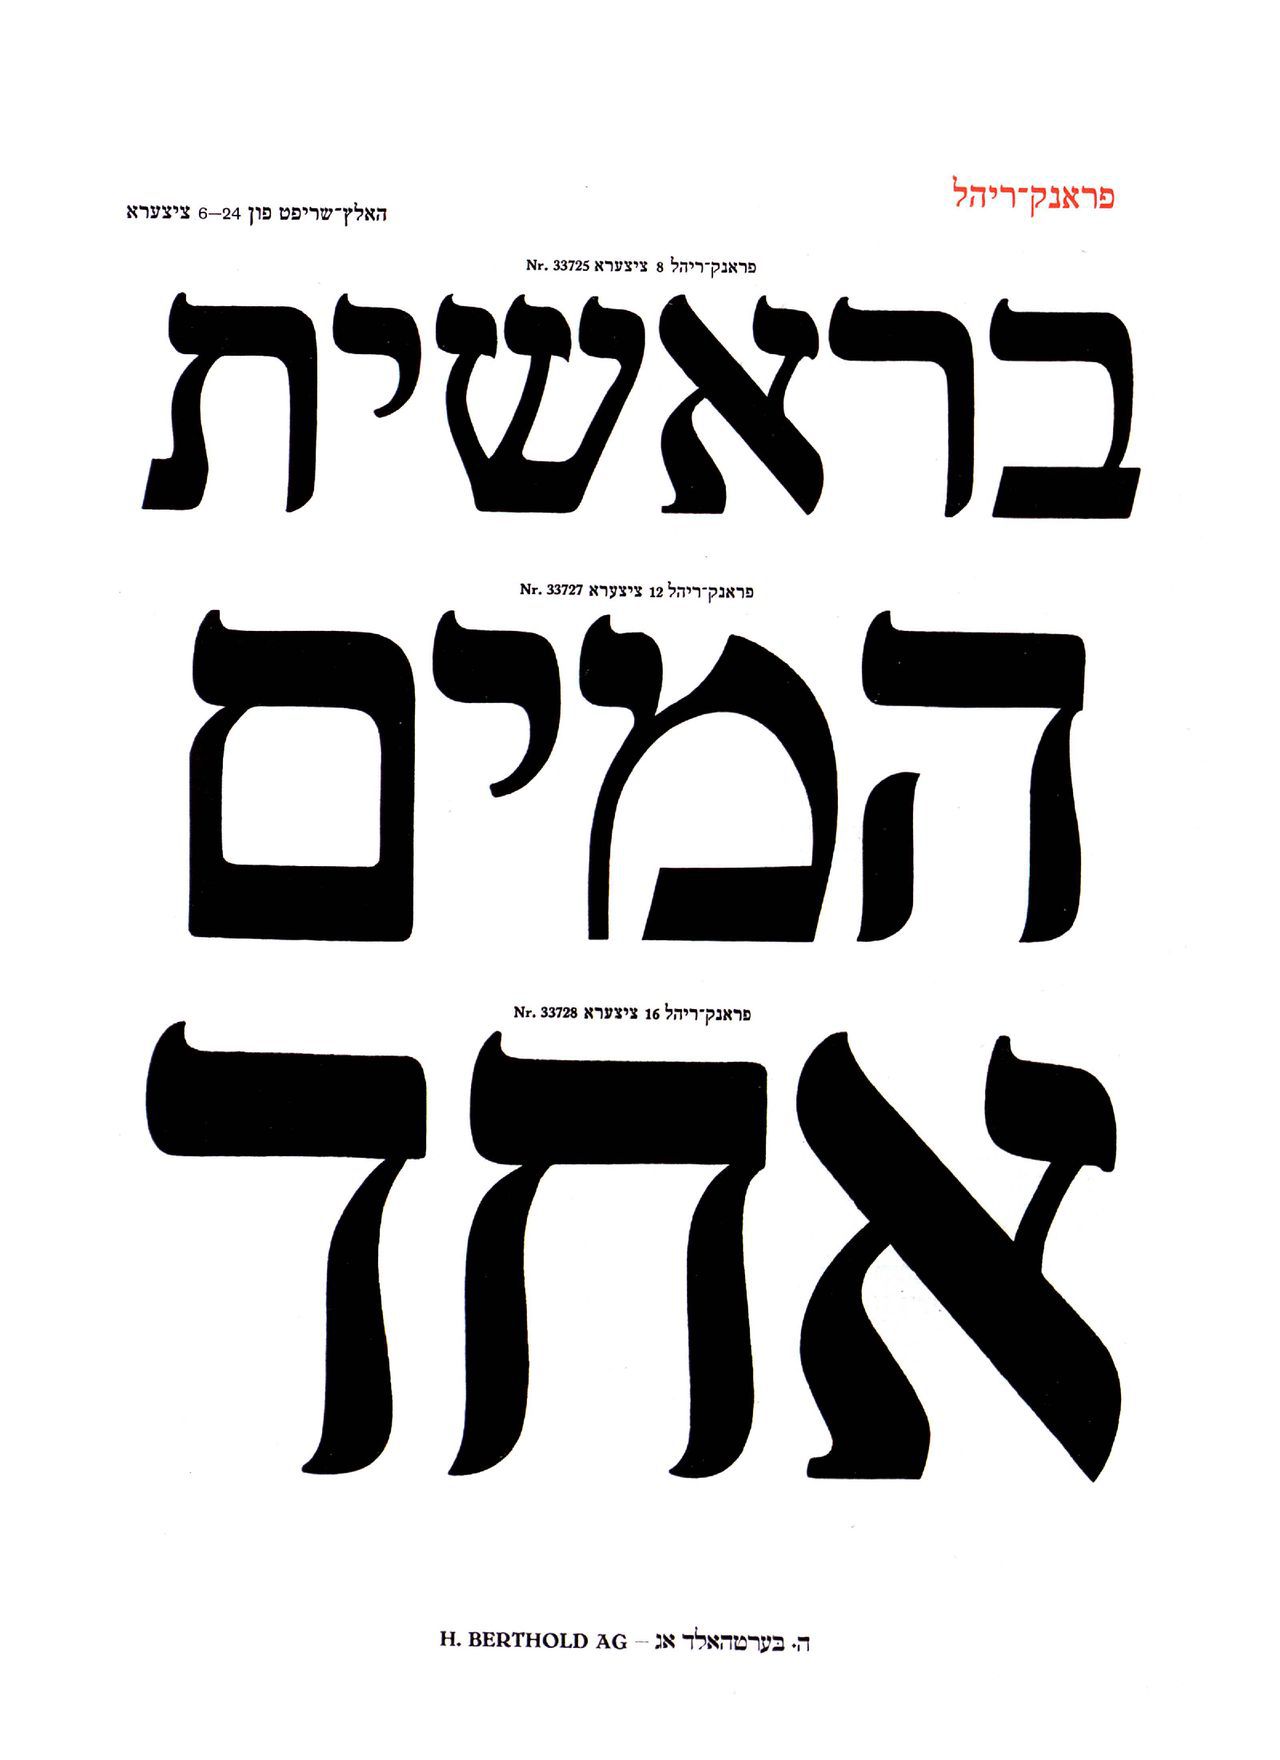 [Joseph Tscherkassky] Berṭhold : shrifṭgiseray un mesinglinye fabriḳn aḳtsiengezelshafṭ (Yiddish) 51